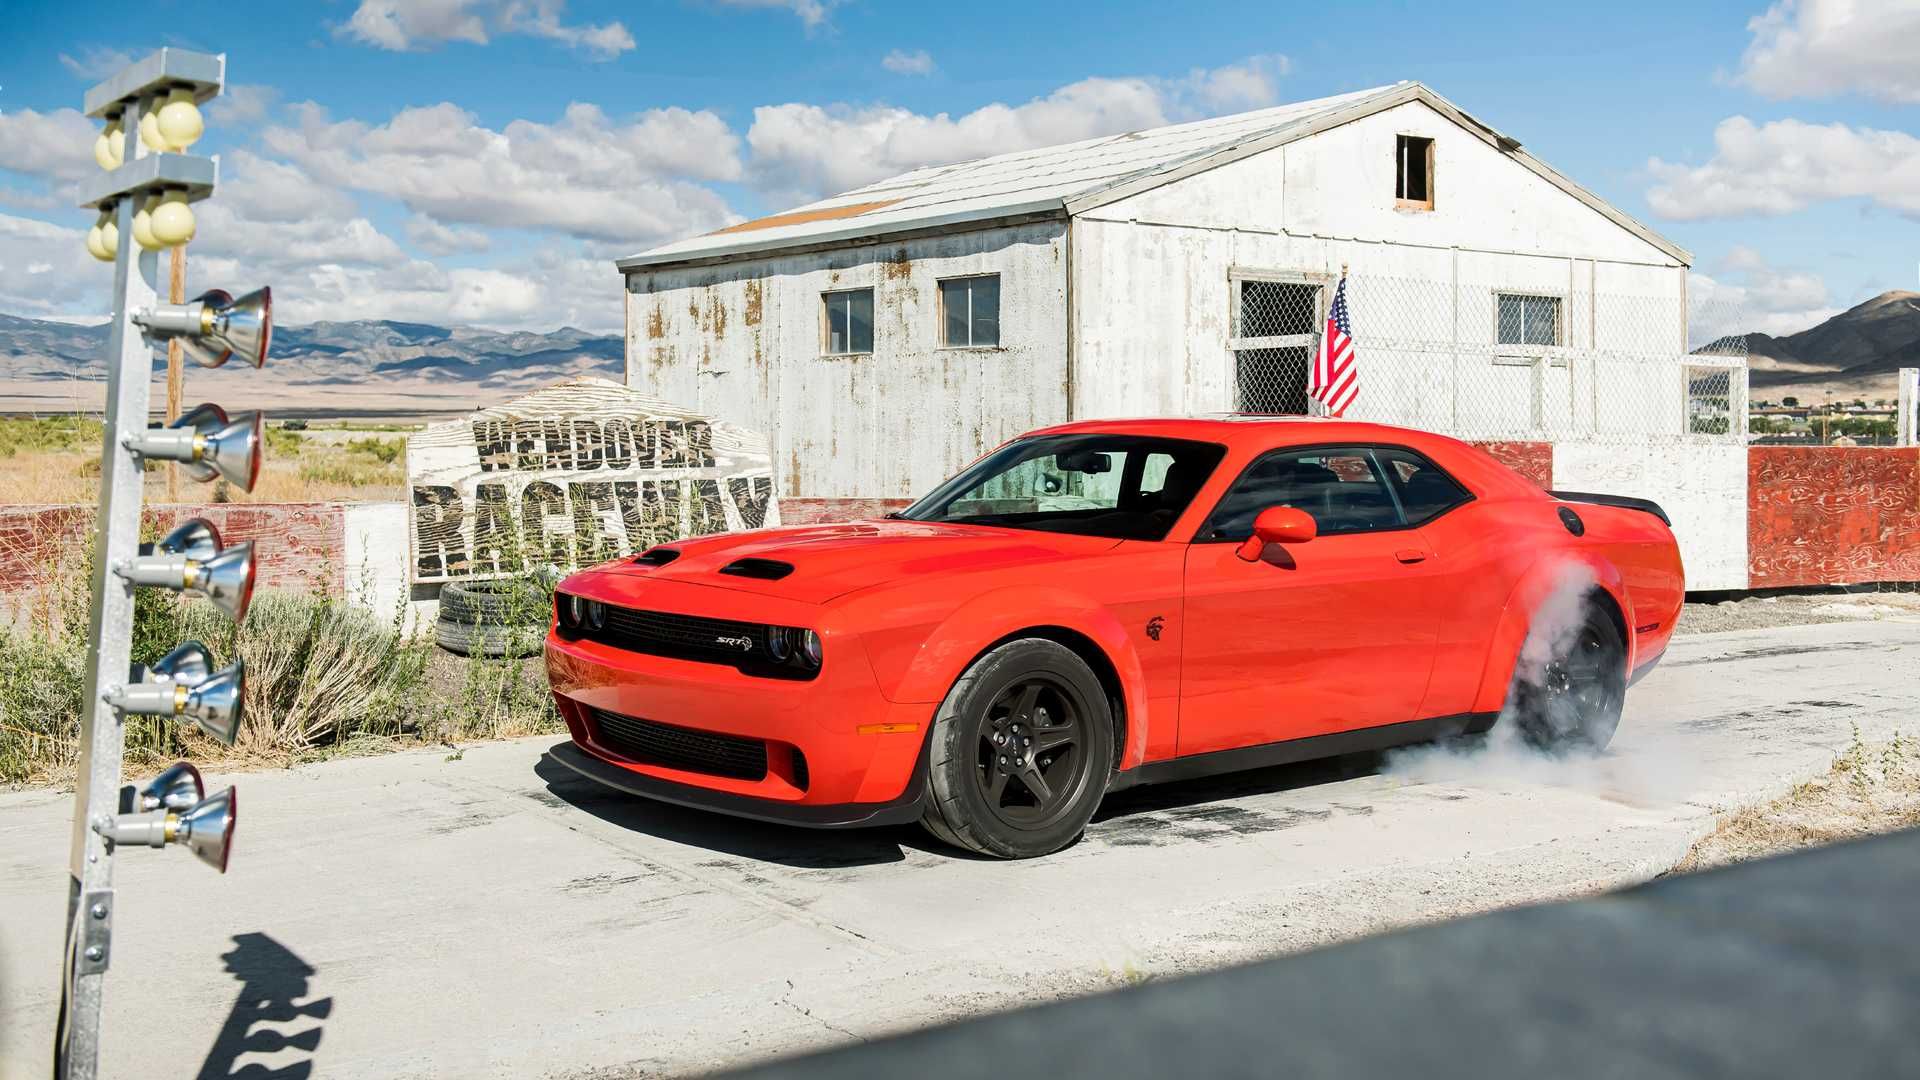 مرجع متخصصين ايران خودرو دوج چلنجر اس آر تي سوپر استاك / Dodge Challenger SRT Super Stock قرمز در كنار خانه